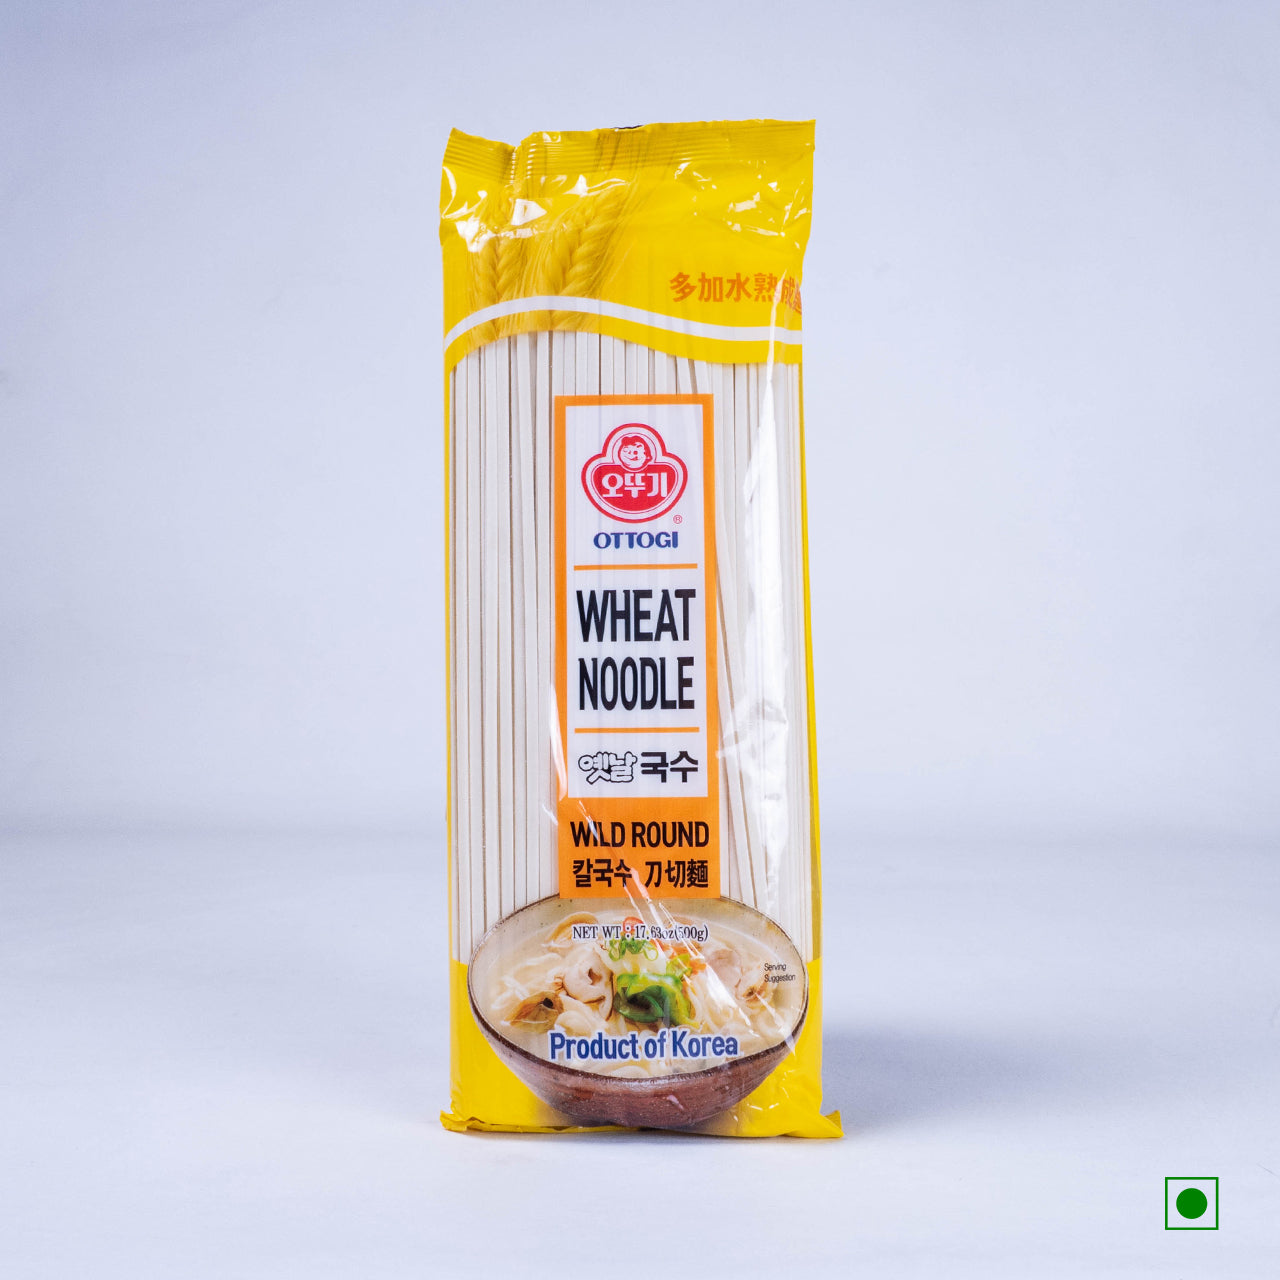 Wheat Noodle - Wild Round